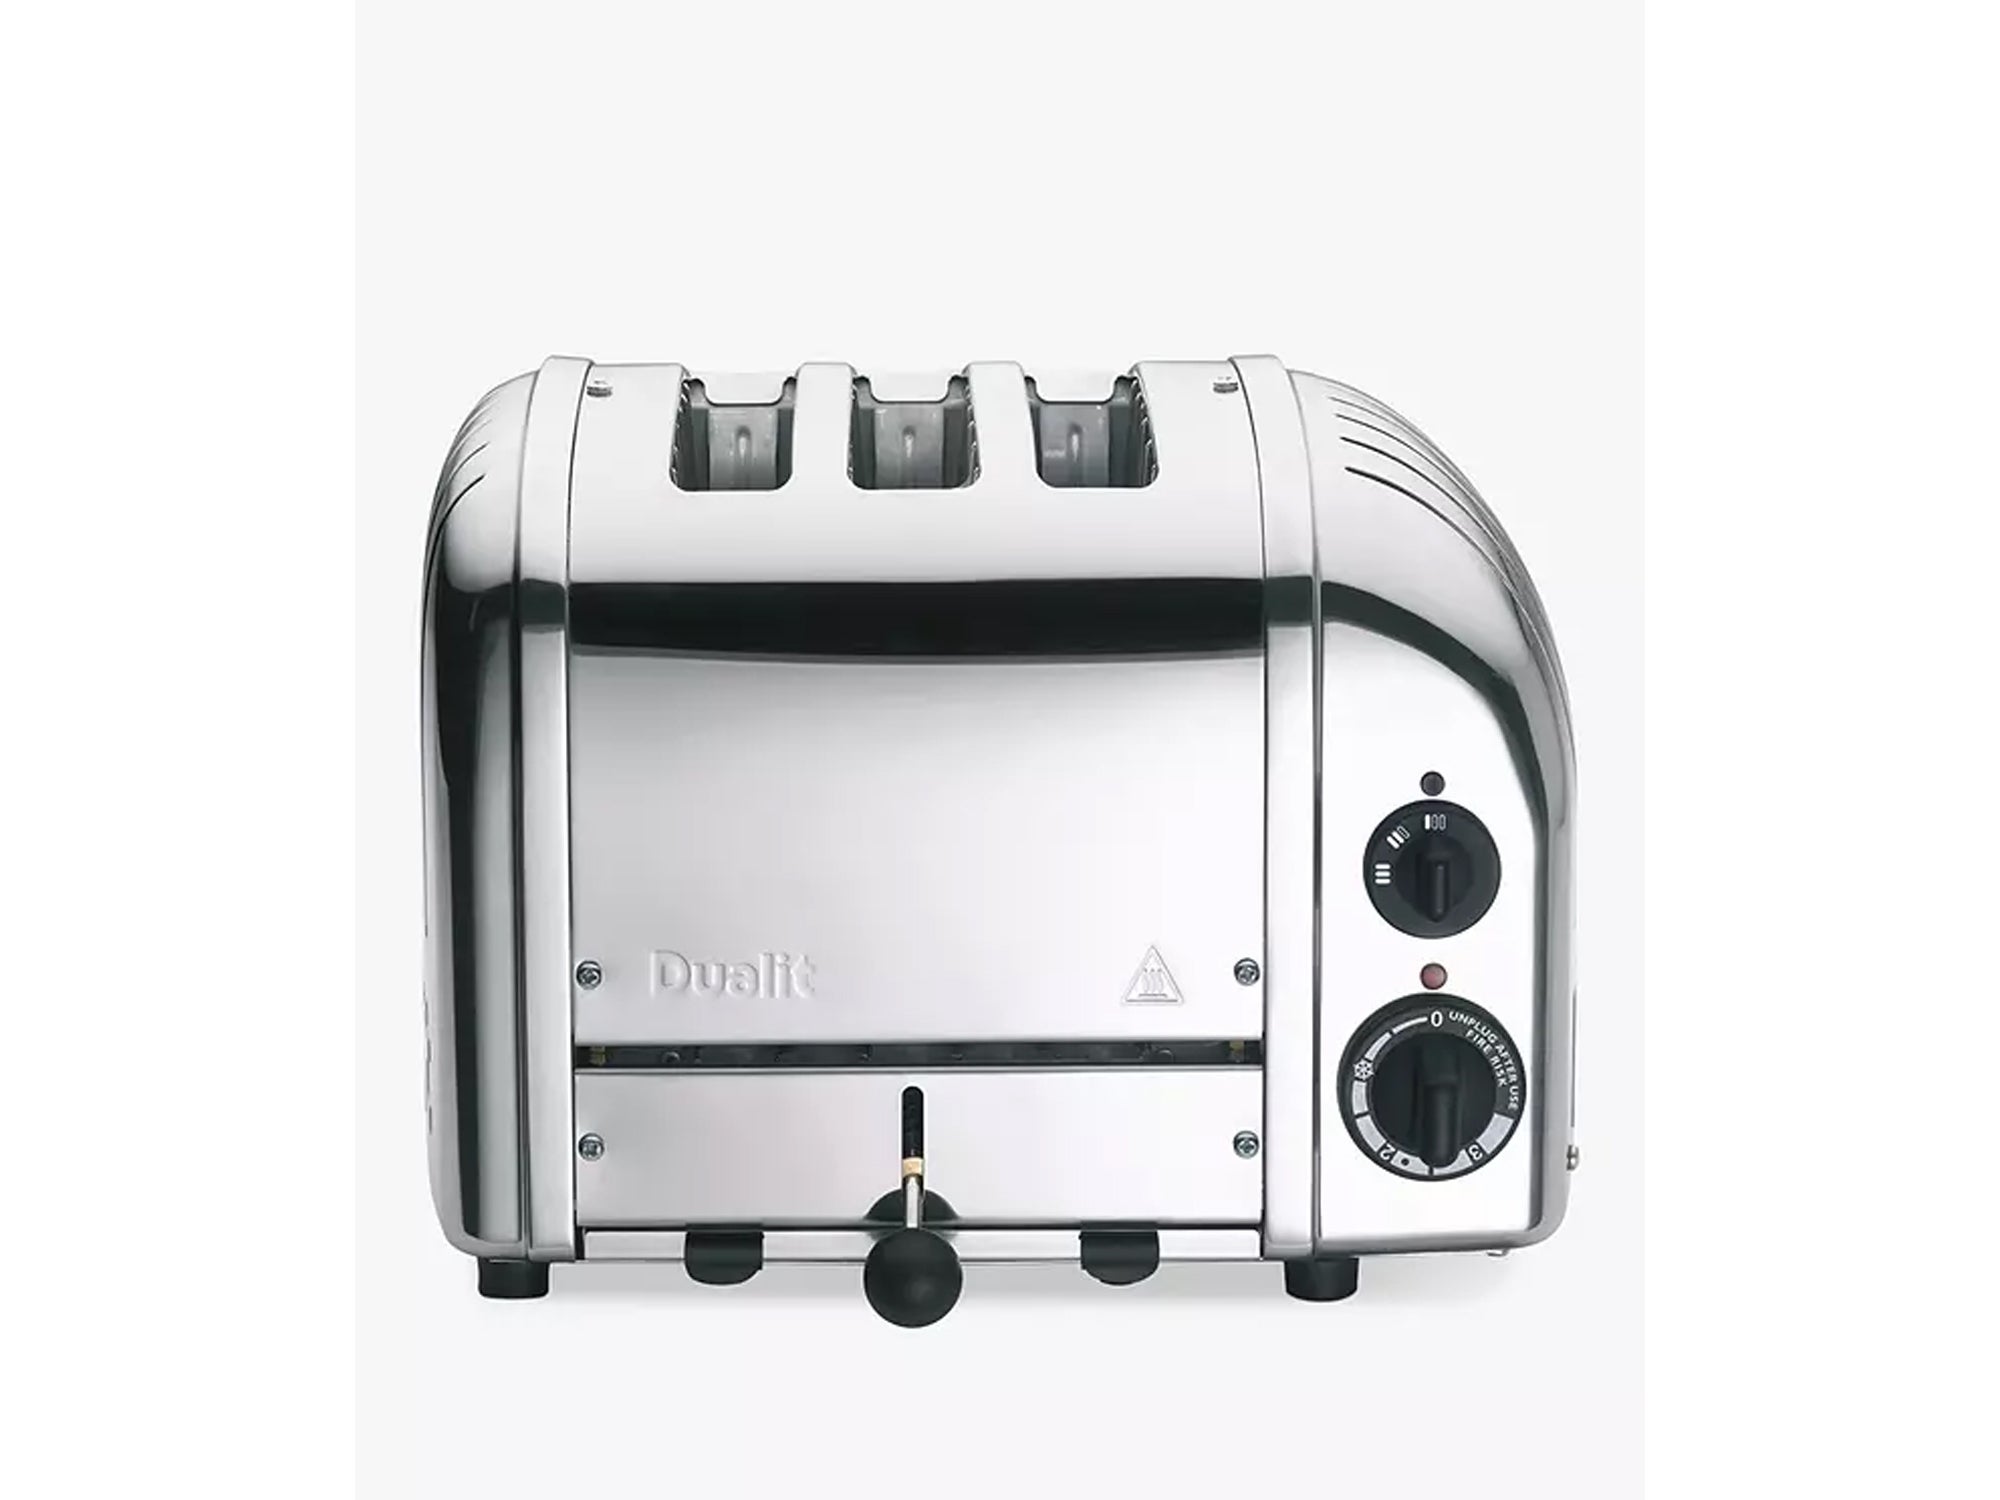 Dualit 3-slot vario toaster.jpg